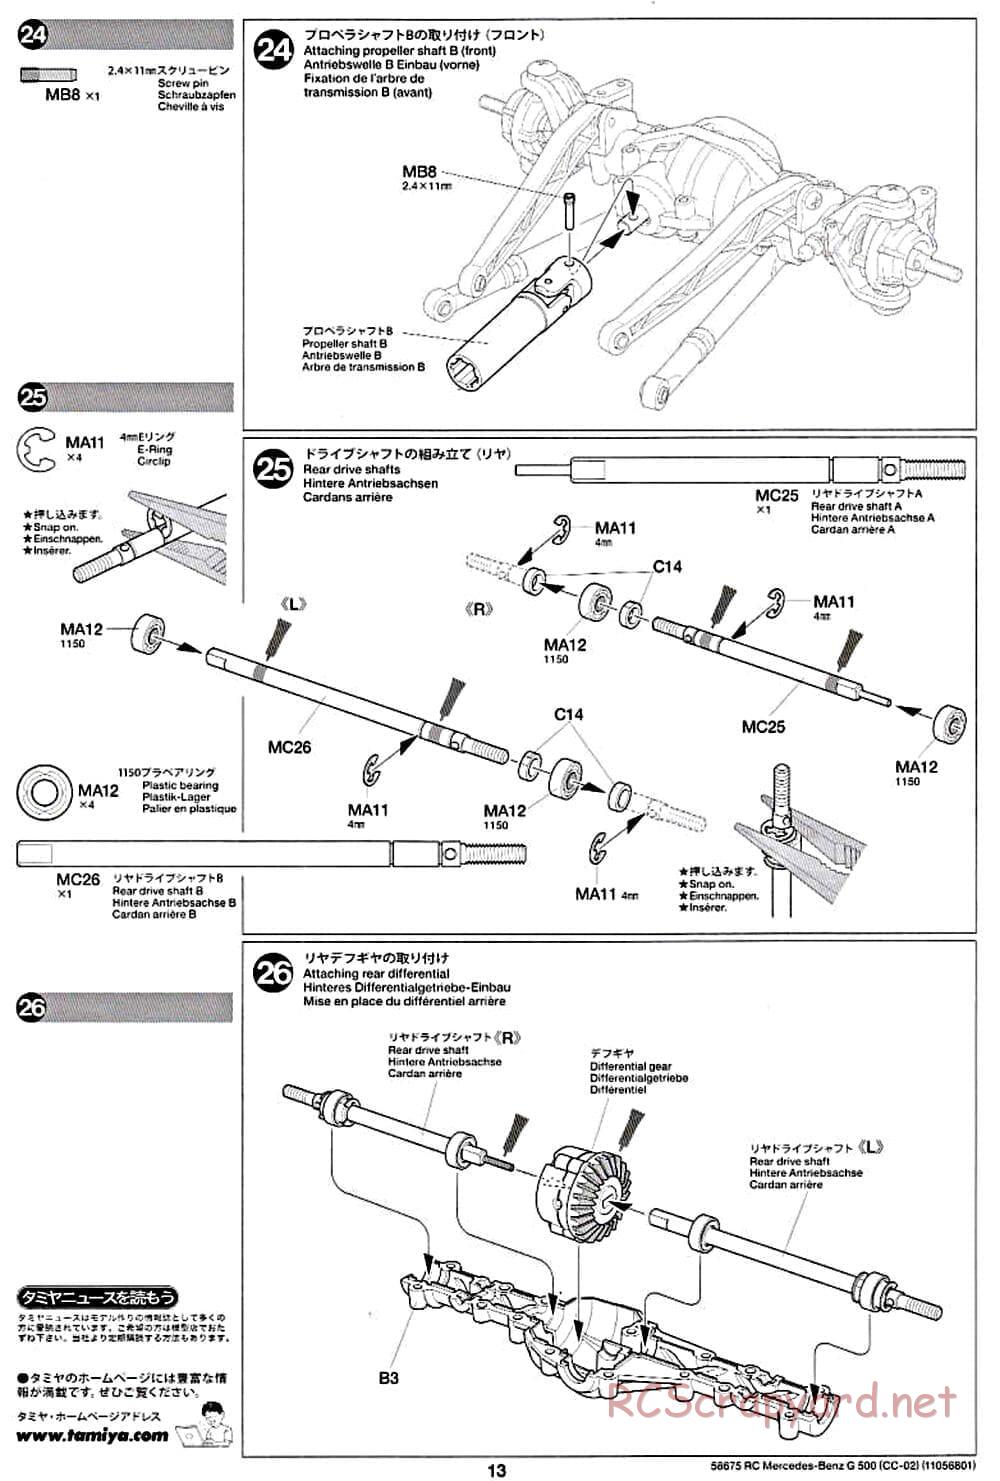 Tamiya - Mercedes-Benz G500 - CC-02 Chassis - Manual - Page 13